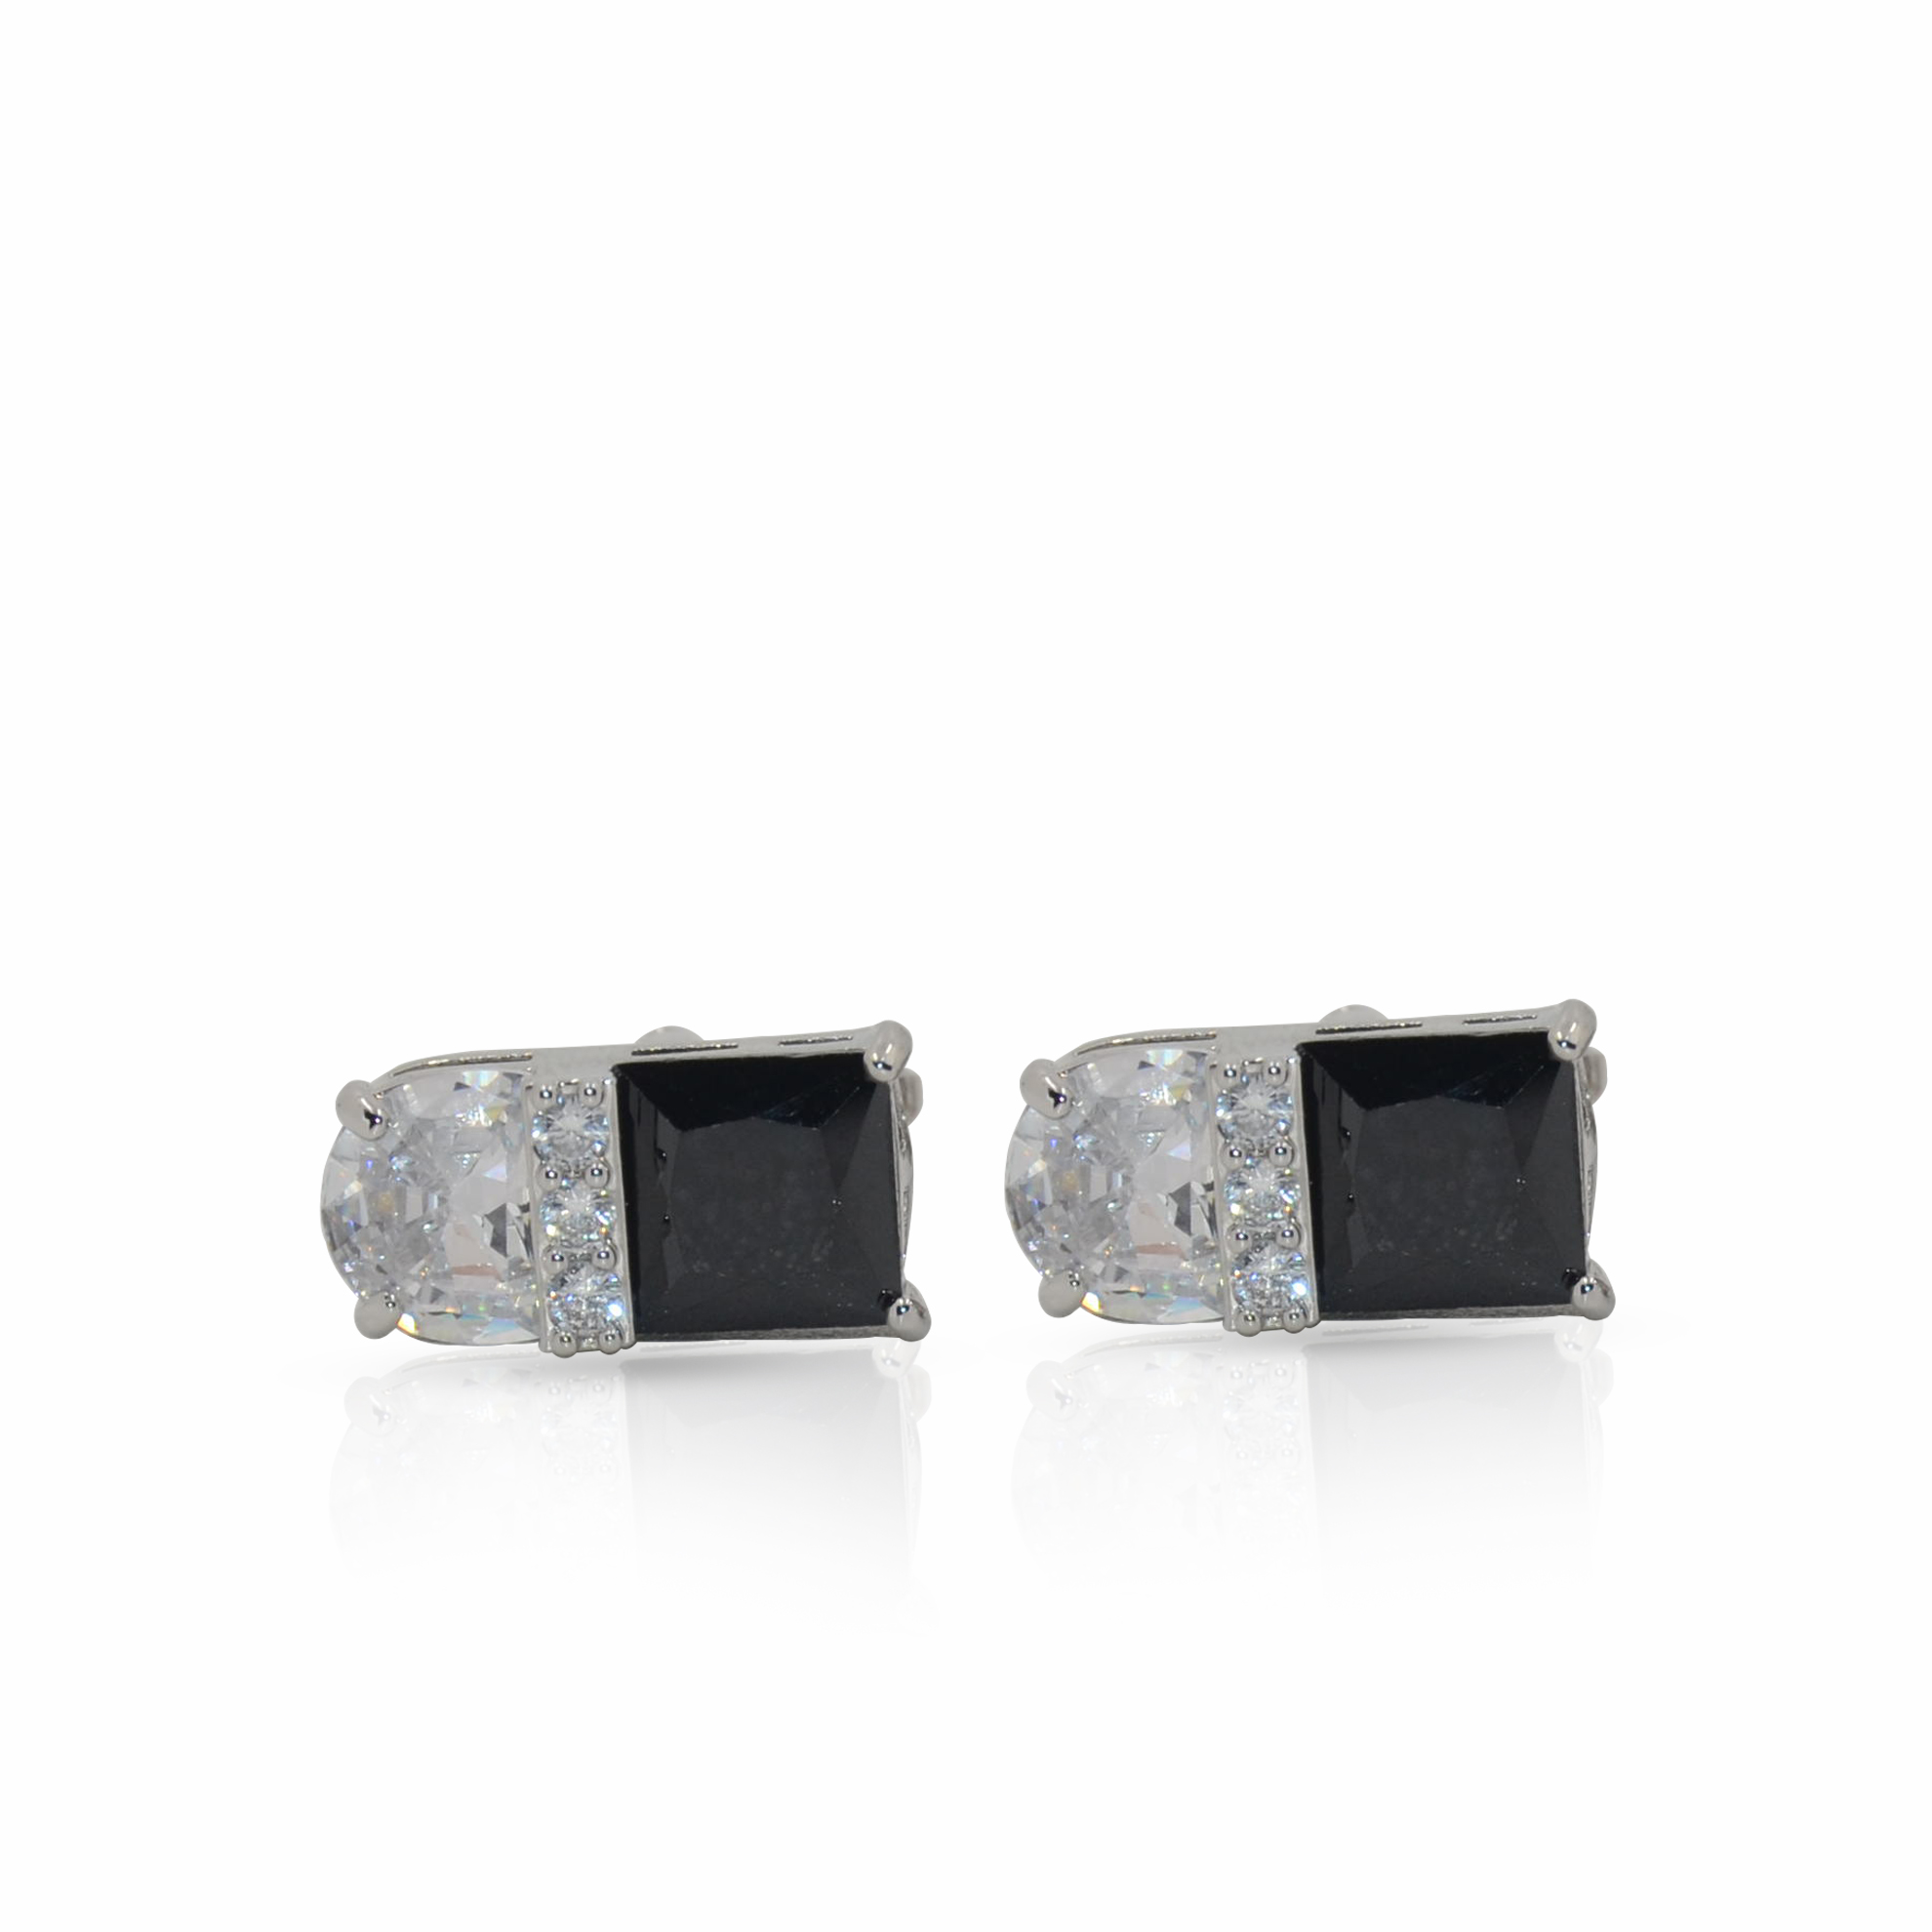 Cufflers Designer Cufflinks CU-4027-D | Silver & Black Rectangle with Crystal | Free Gift Box